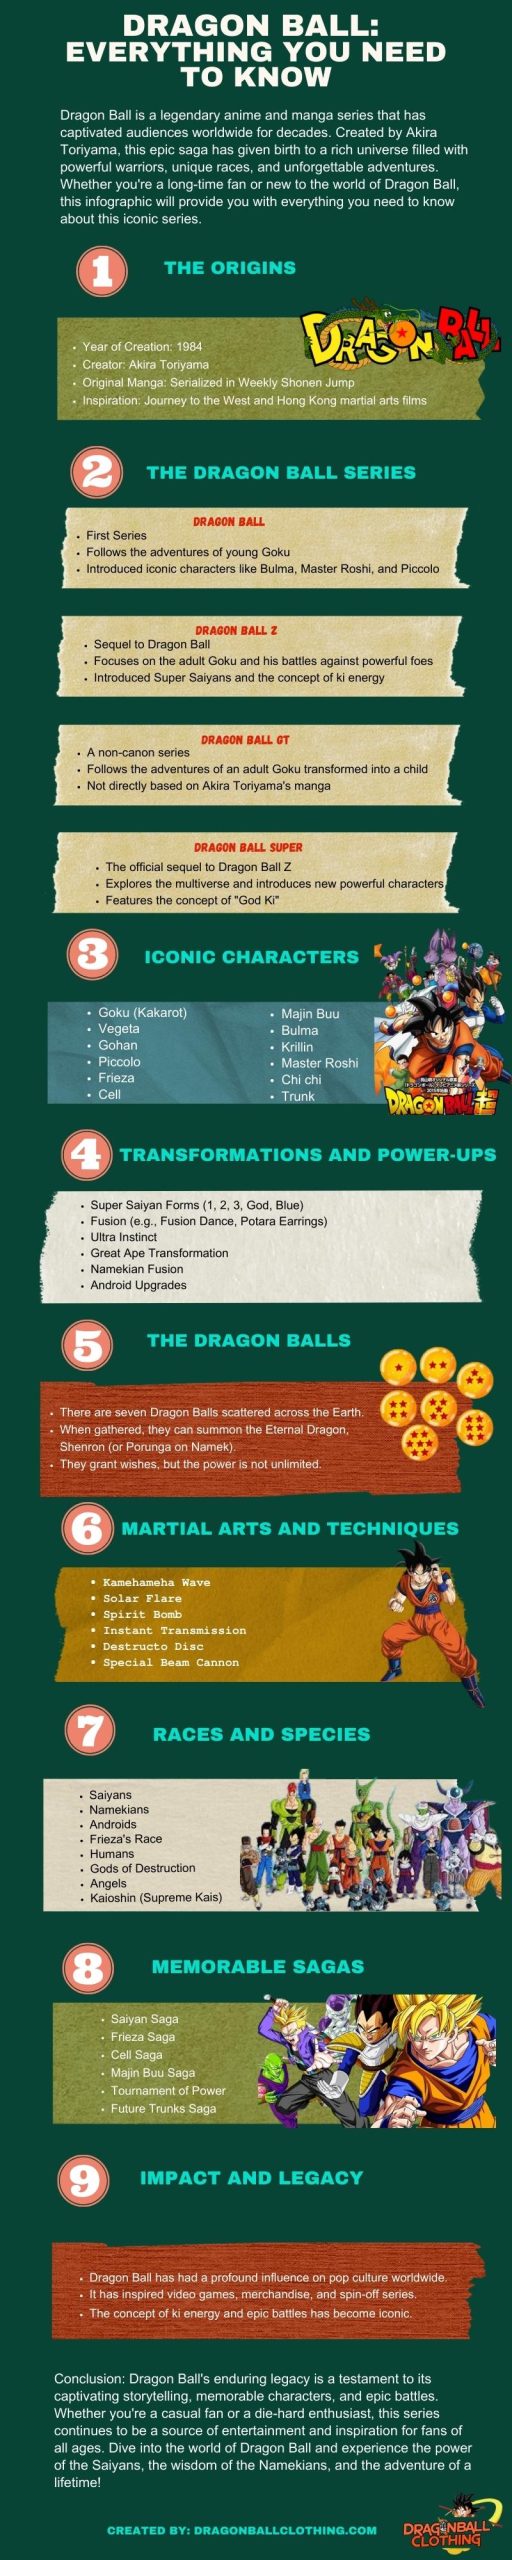 Dragon Ball anime series Everything You Need to Know